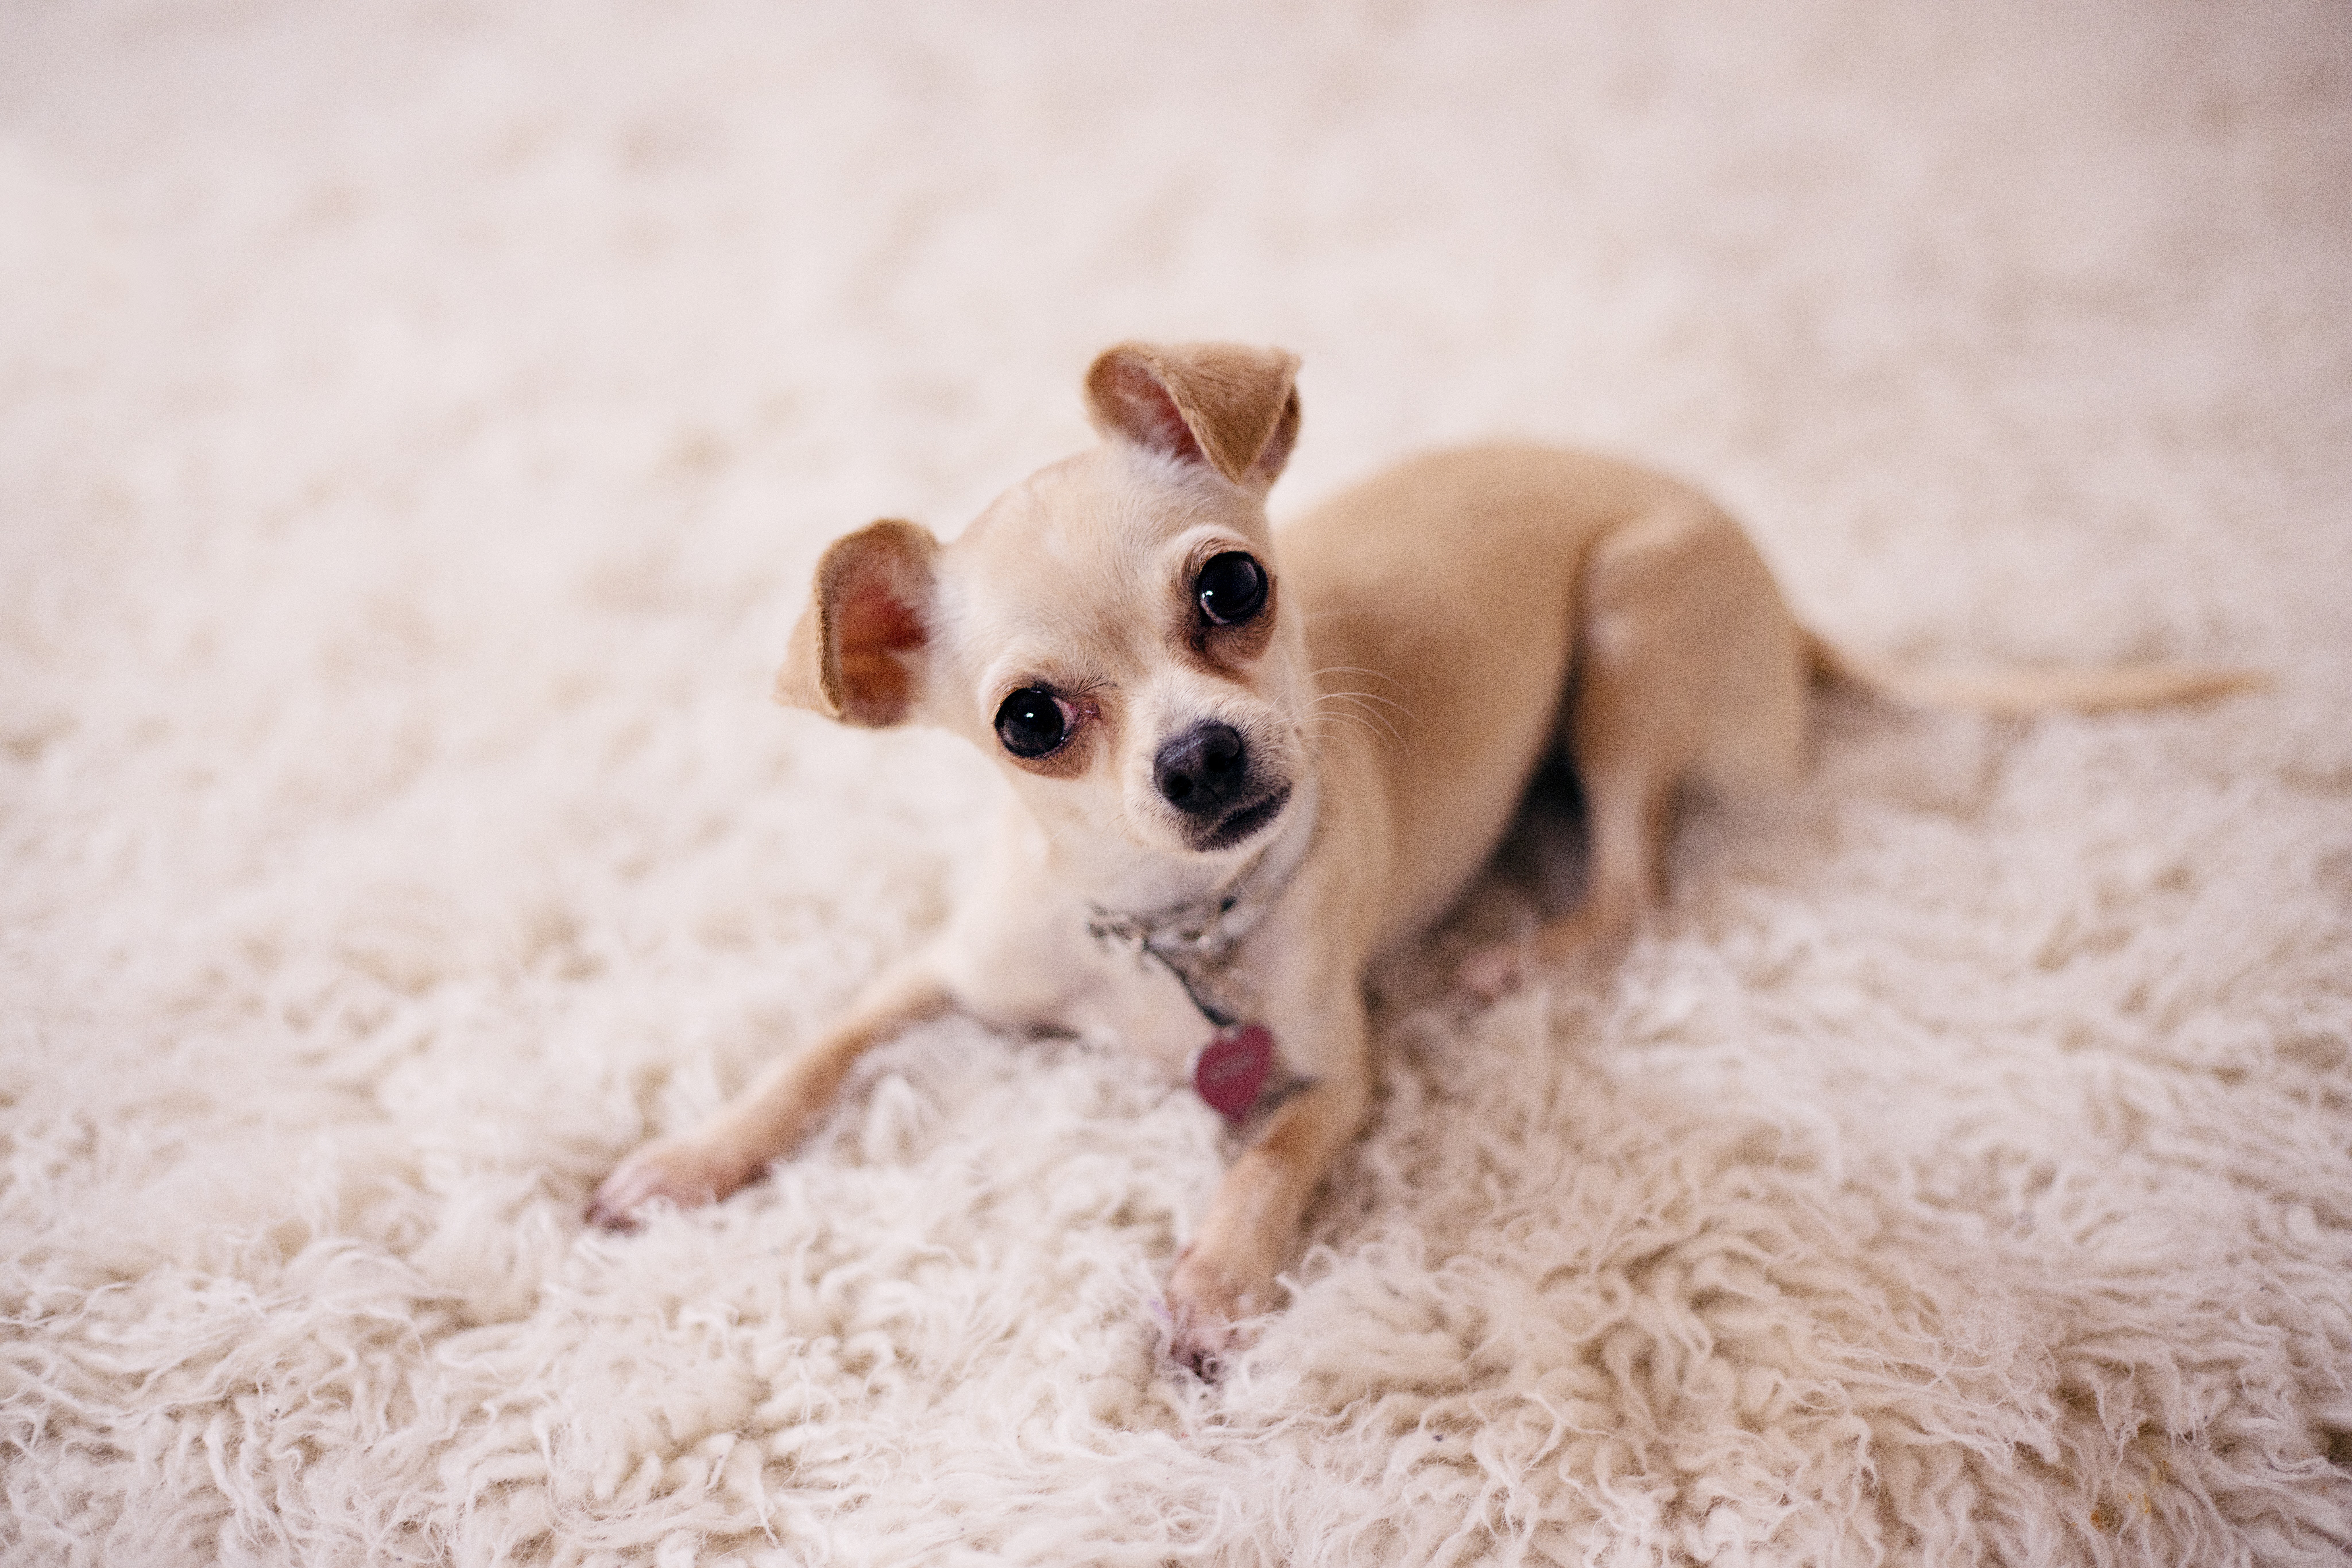 Small tan dog sitting on a beige rug